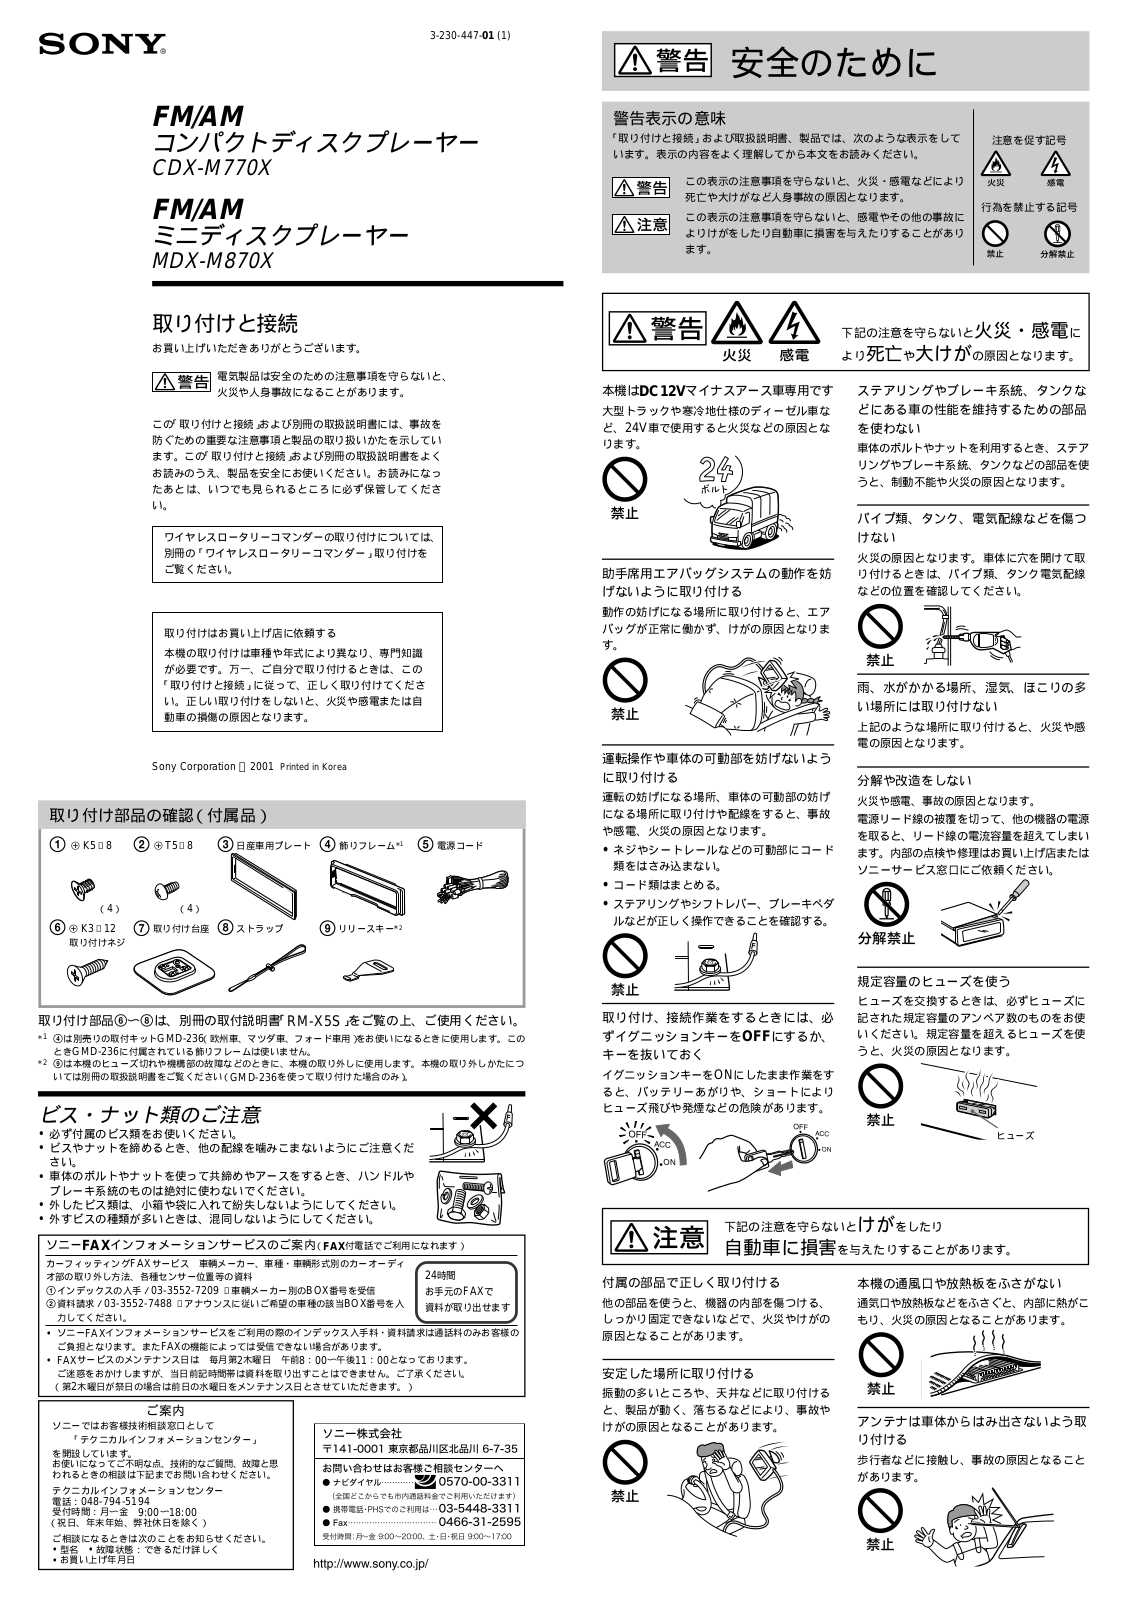 SONY CDX-M770X, MDX-M870X User Manual